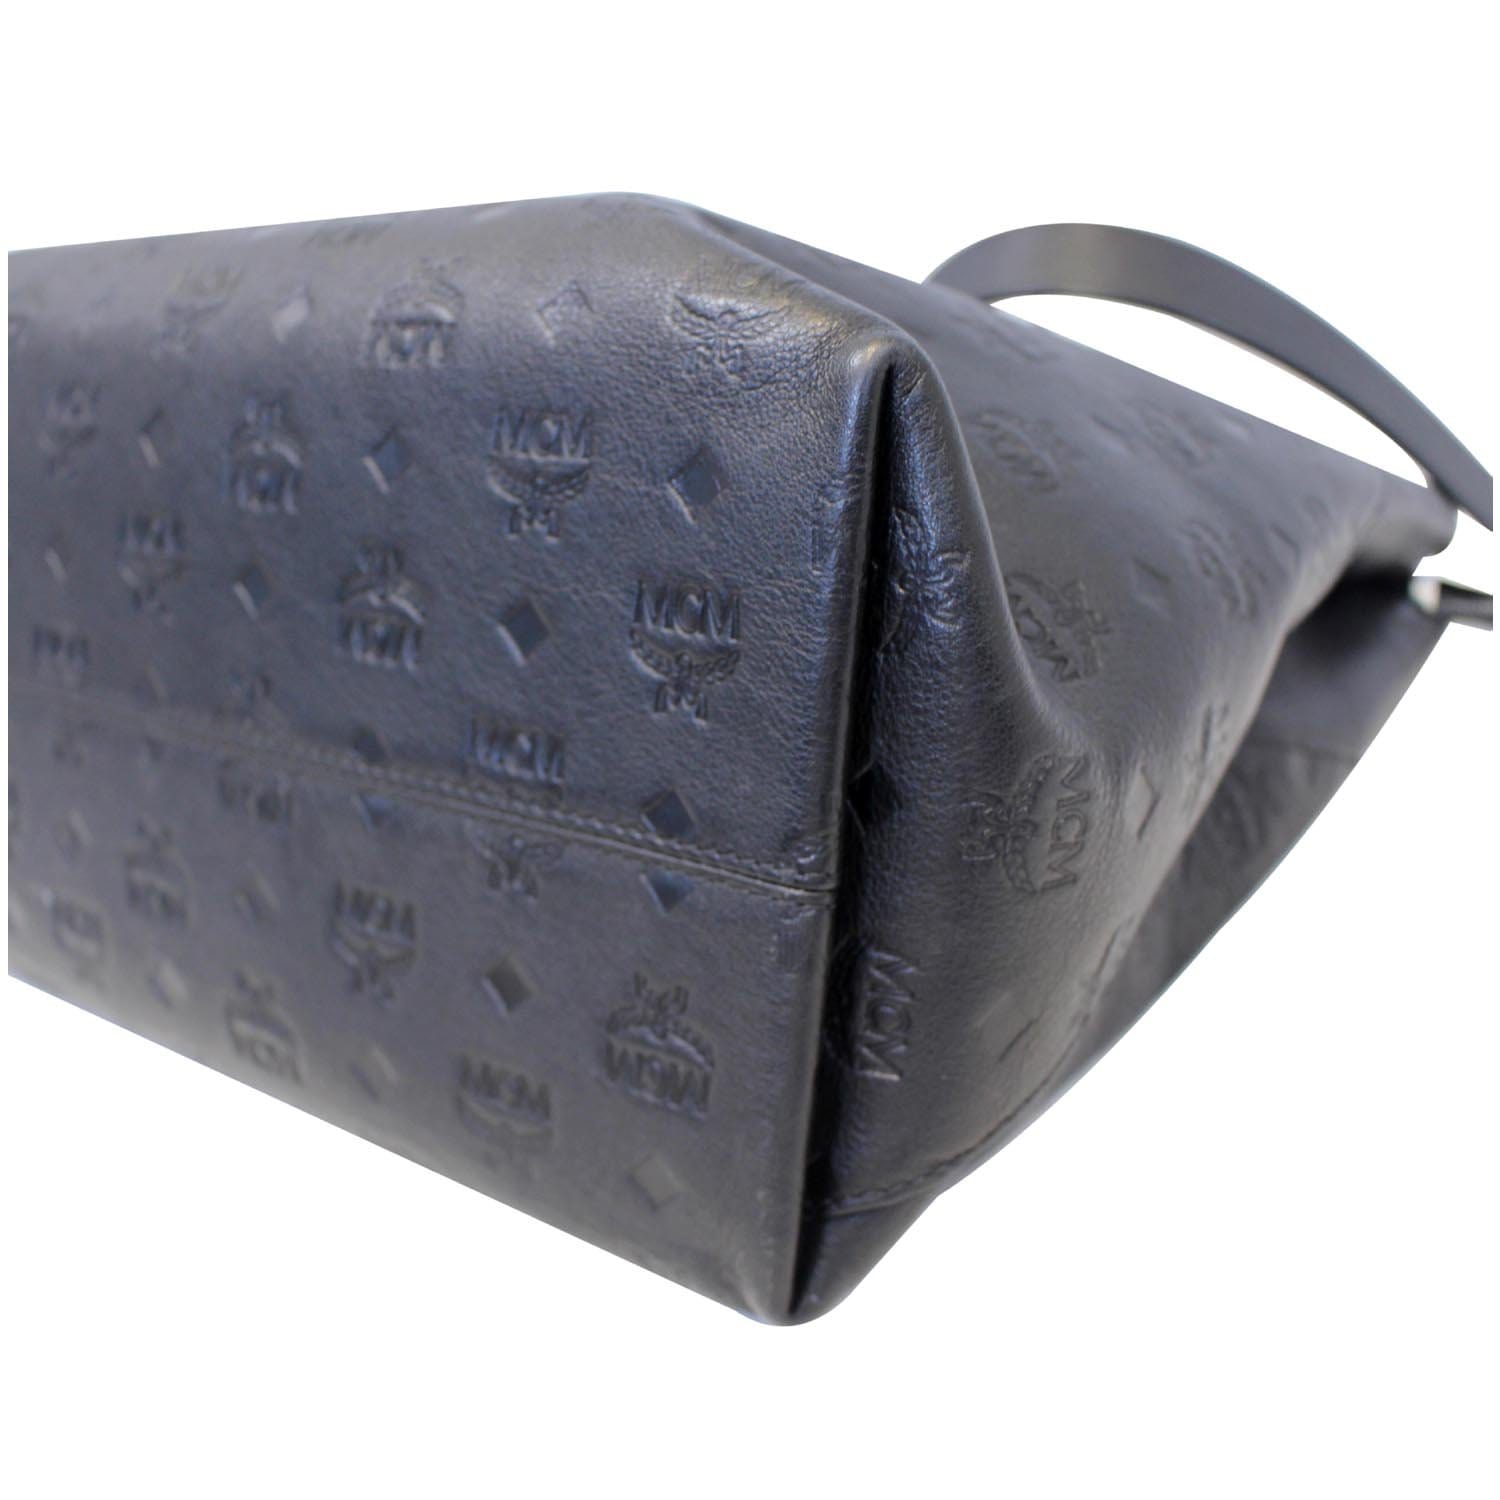 MCM Black Large Klara Monogram Leather Hobo Bag $995+